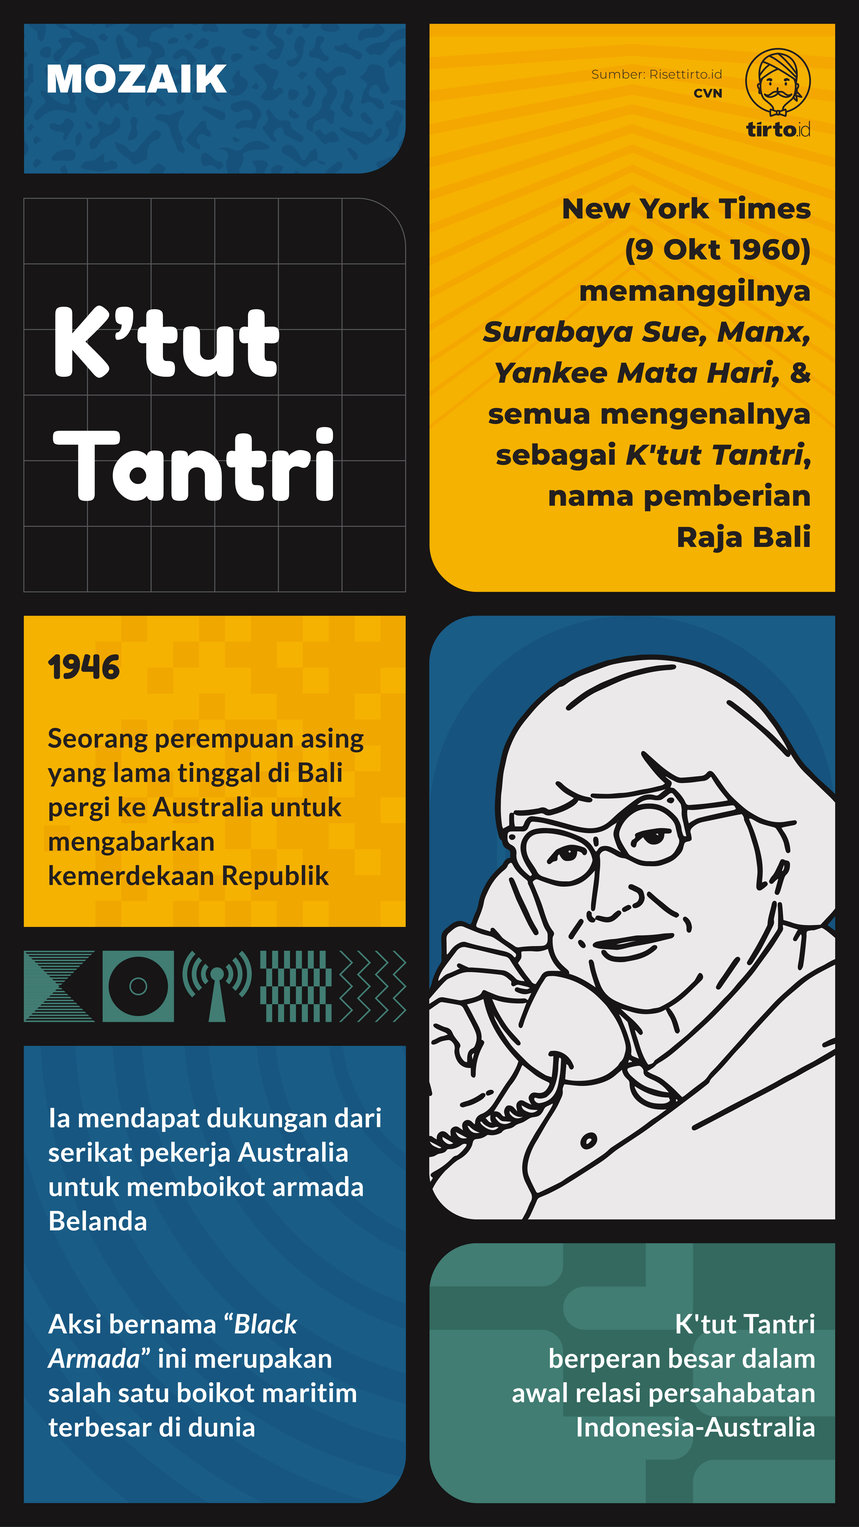 INfografik Mozaik Ktut Tantri